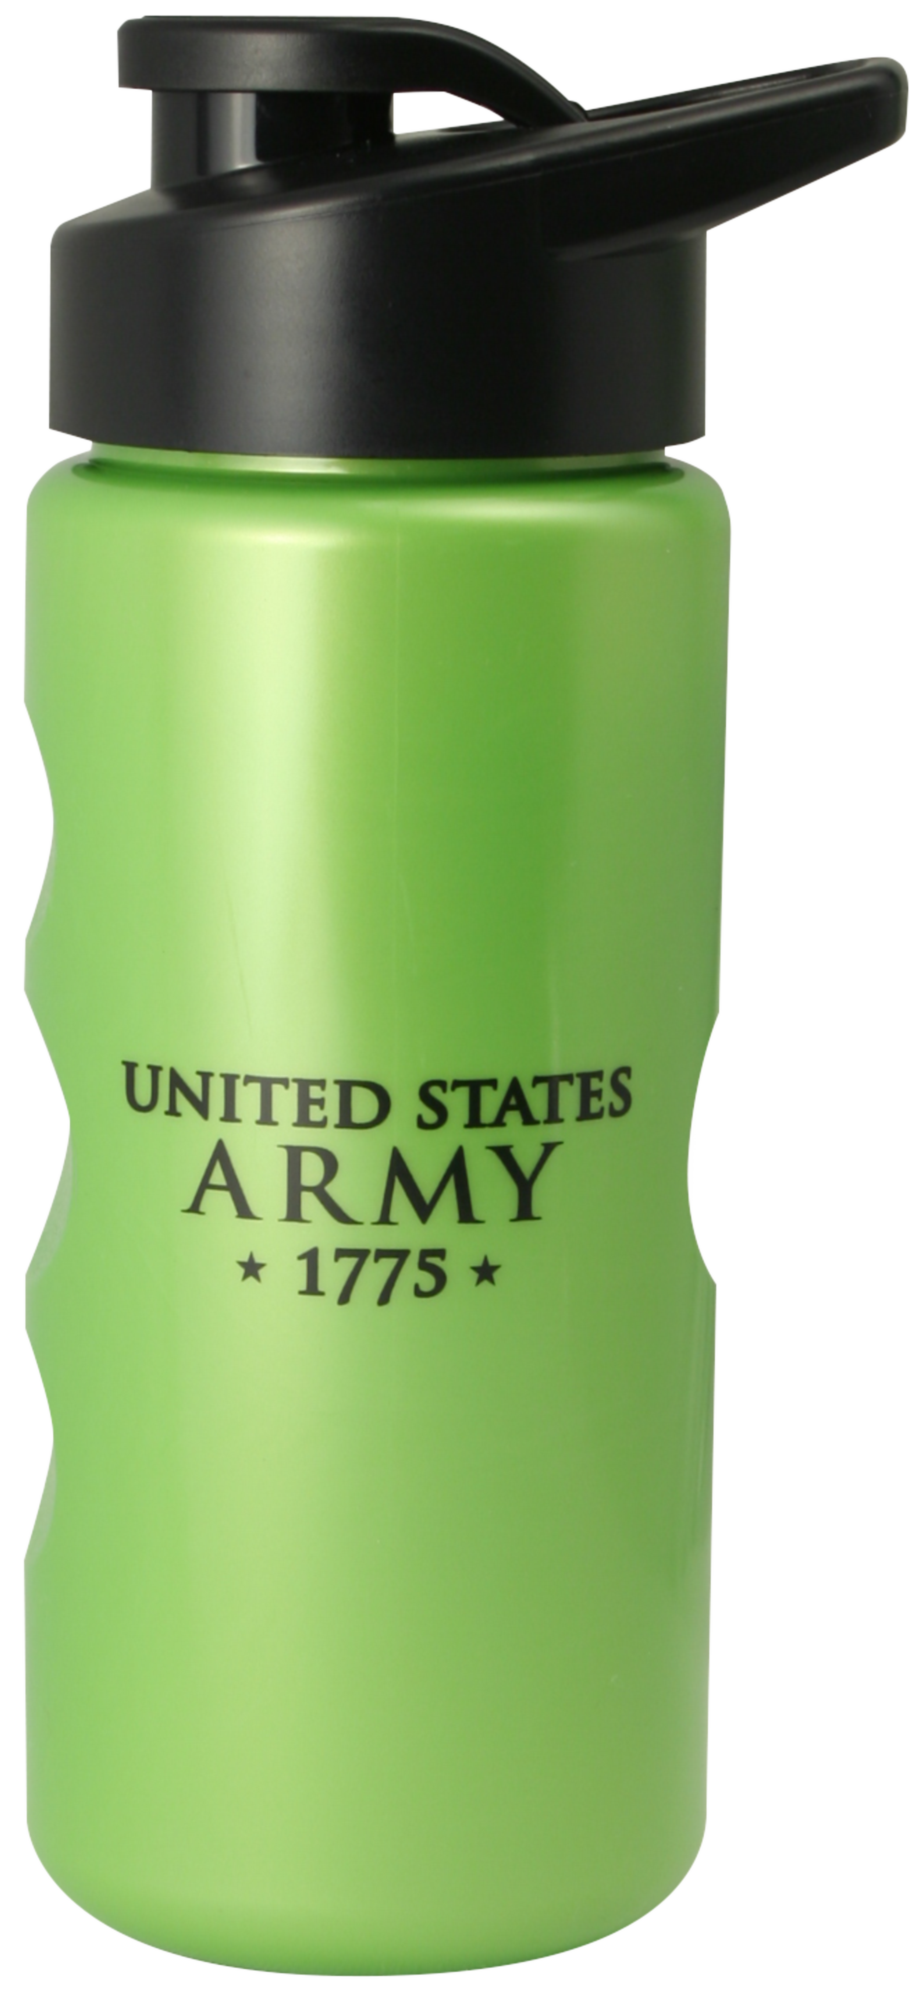 United States Army 1775 on 22 oz. Plastic Bottle